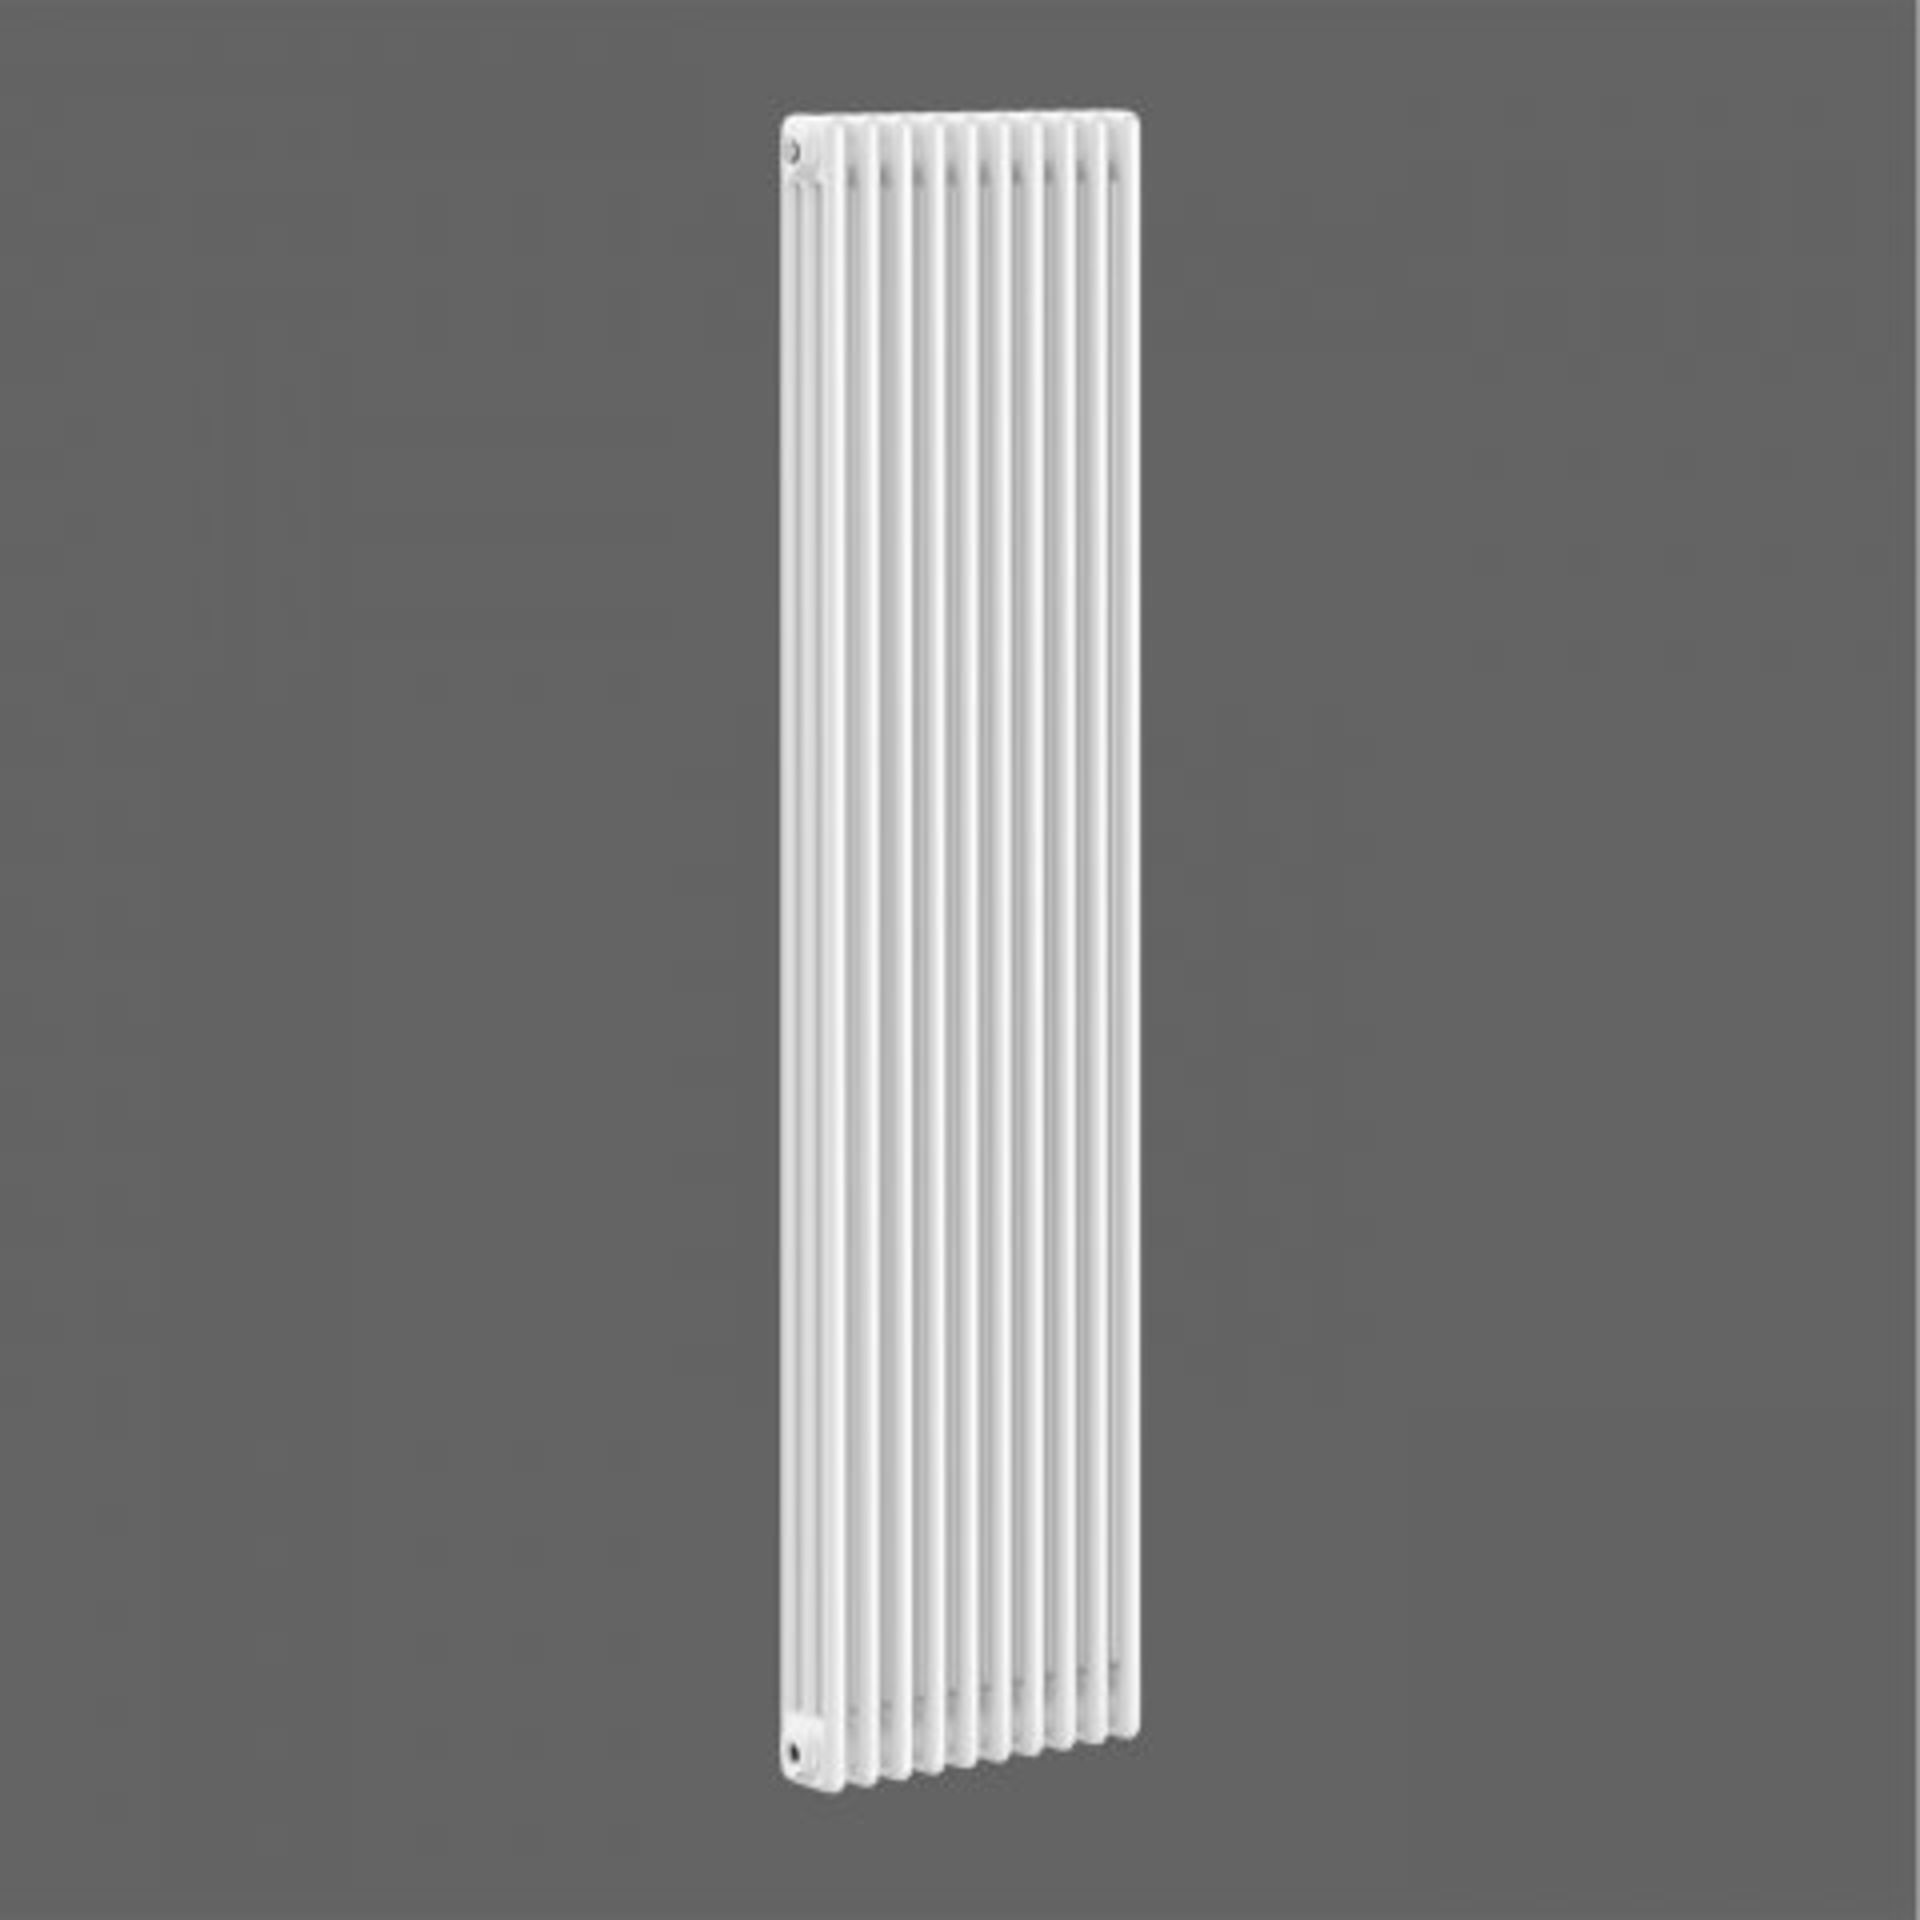 (38) 1800x465mm White Triple Panel Vertical Colosseum Radiator - Roma Premium. RRP £599.99. - Image 2 of 3